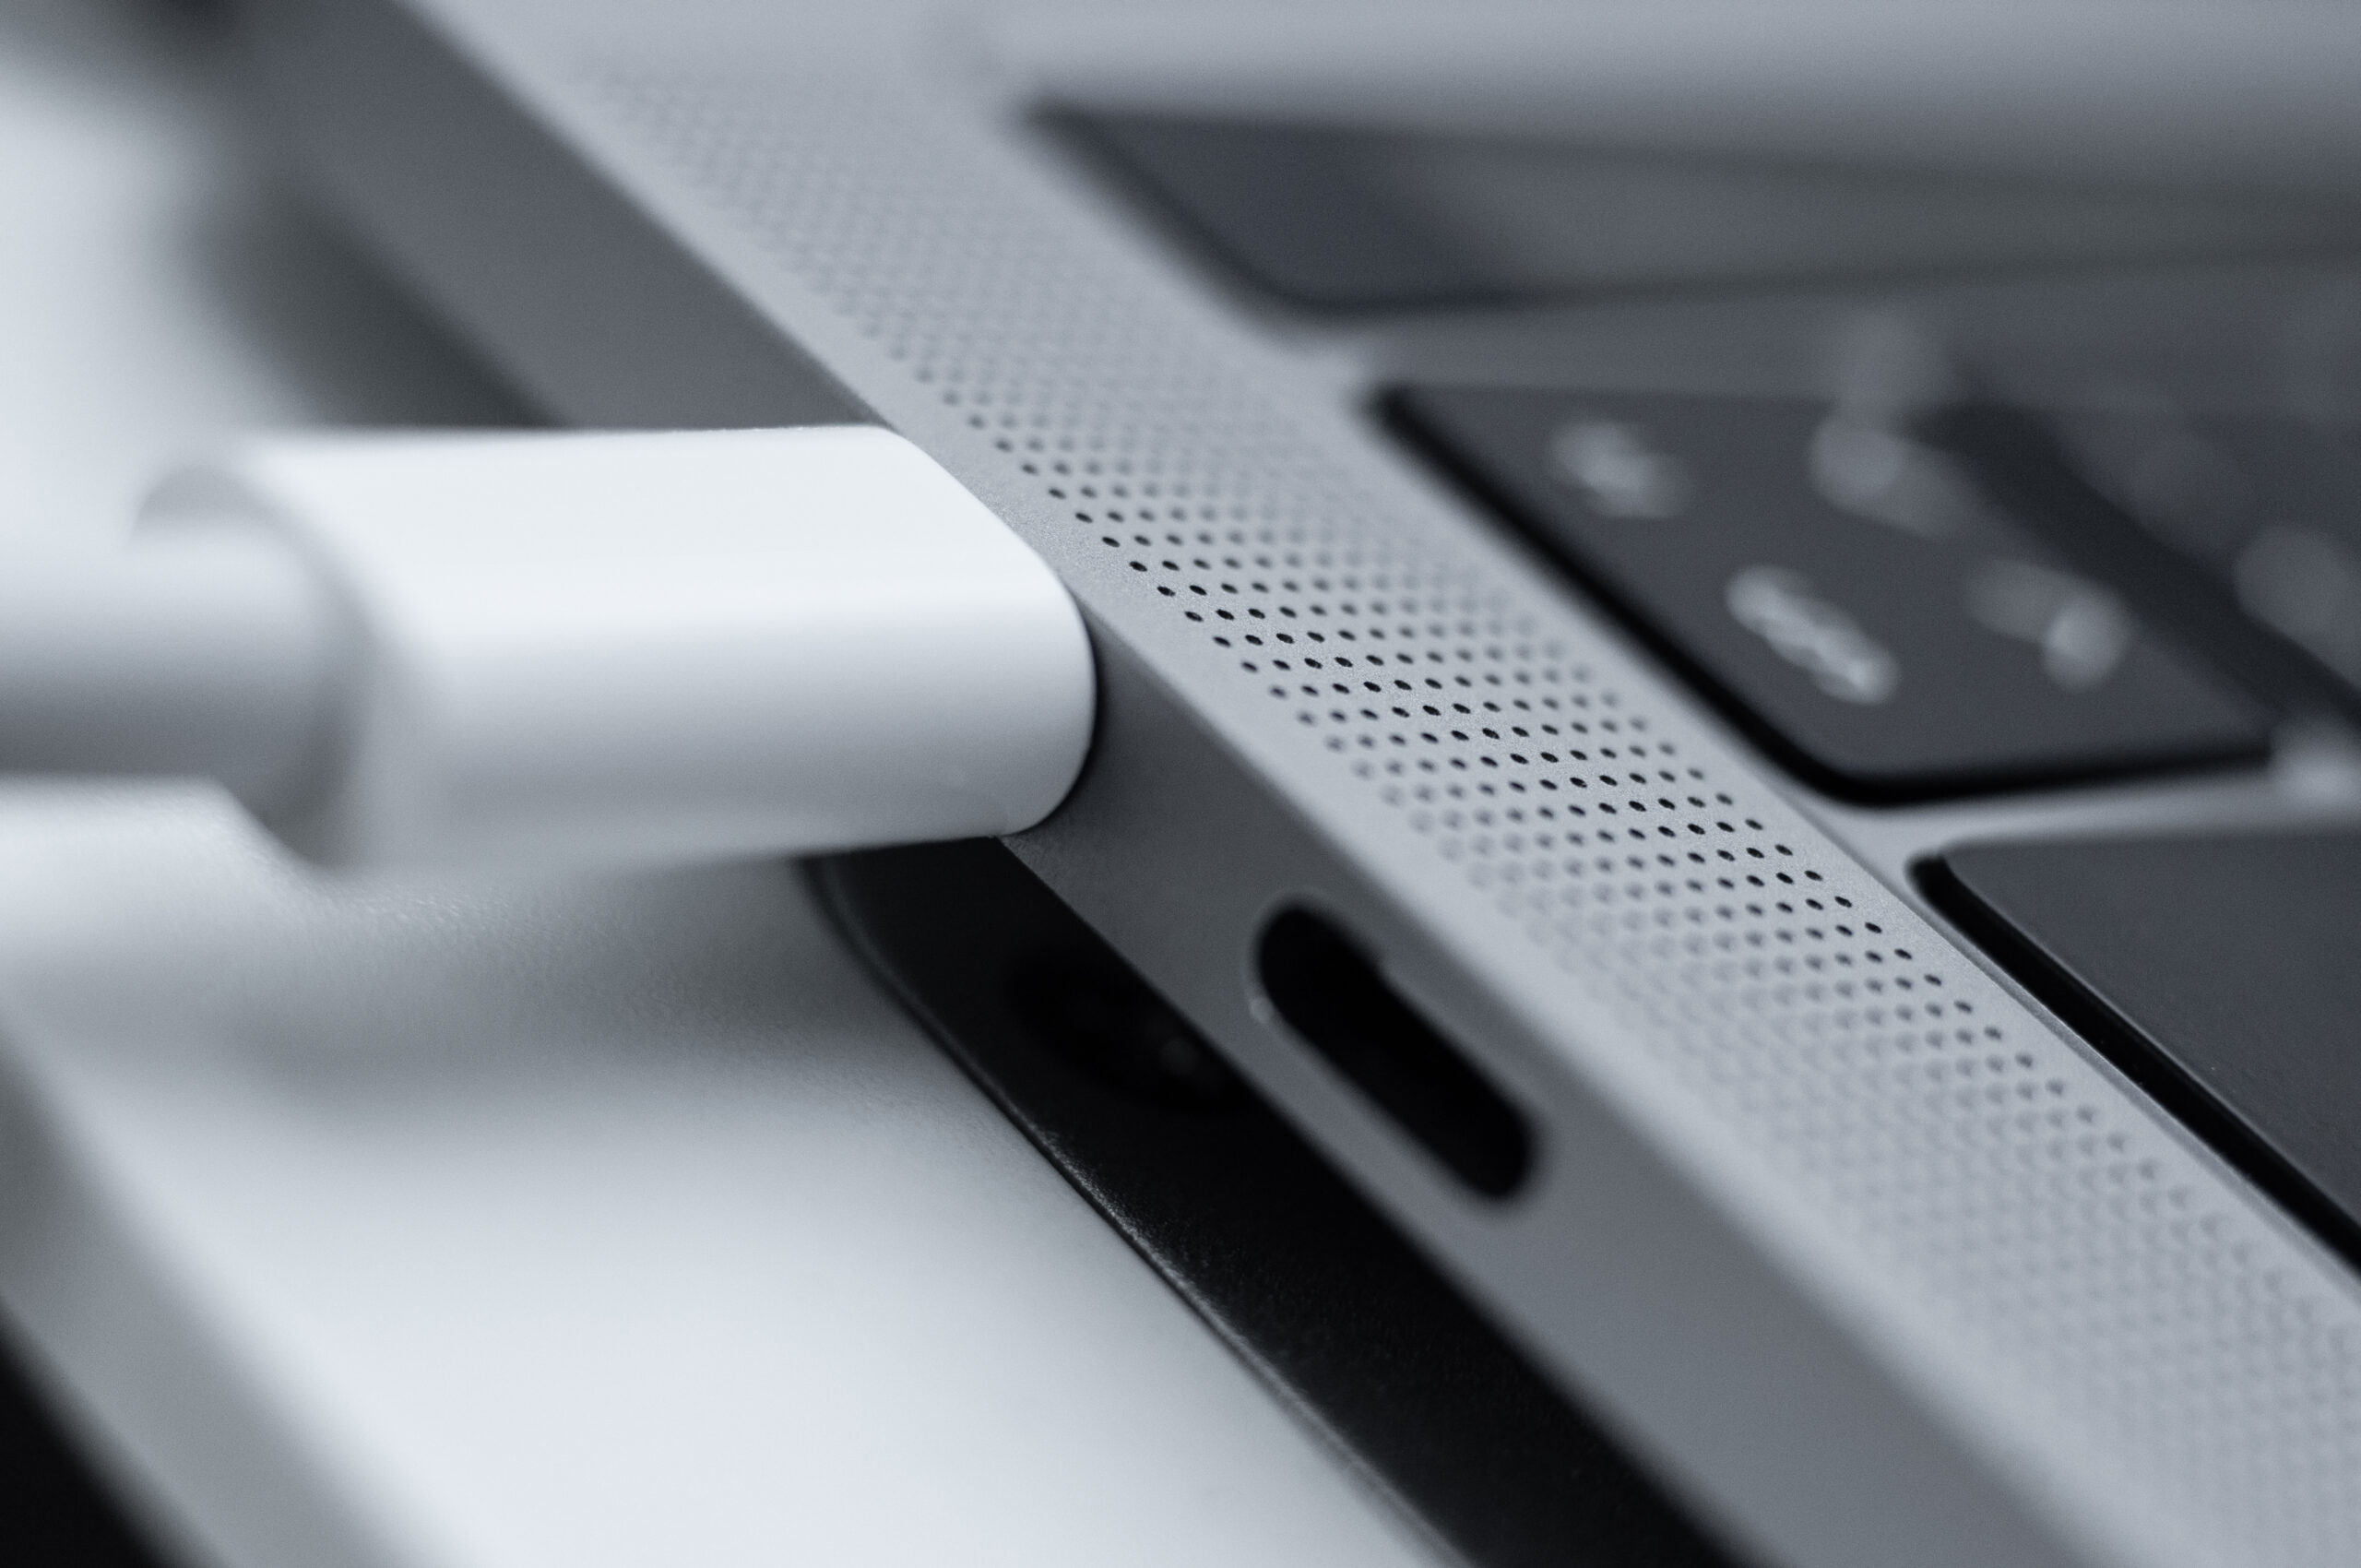 MacBook Pro recarregando com cabo USB-C